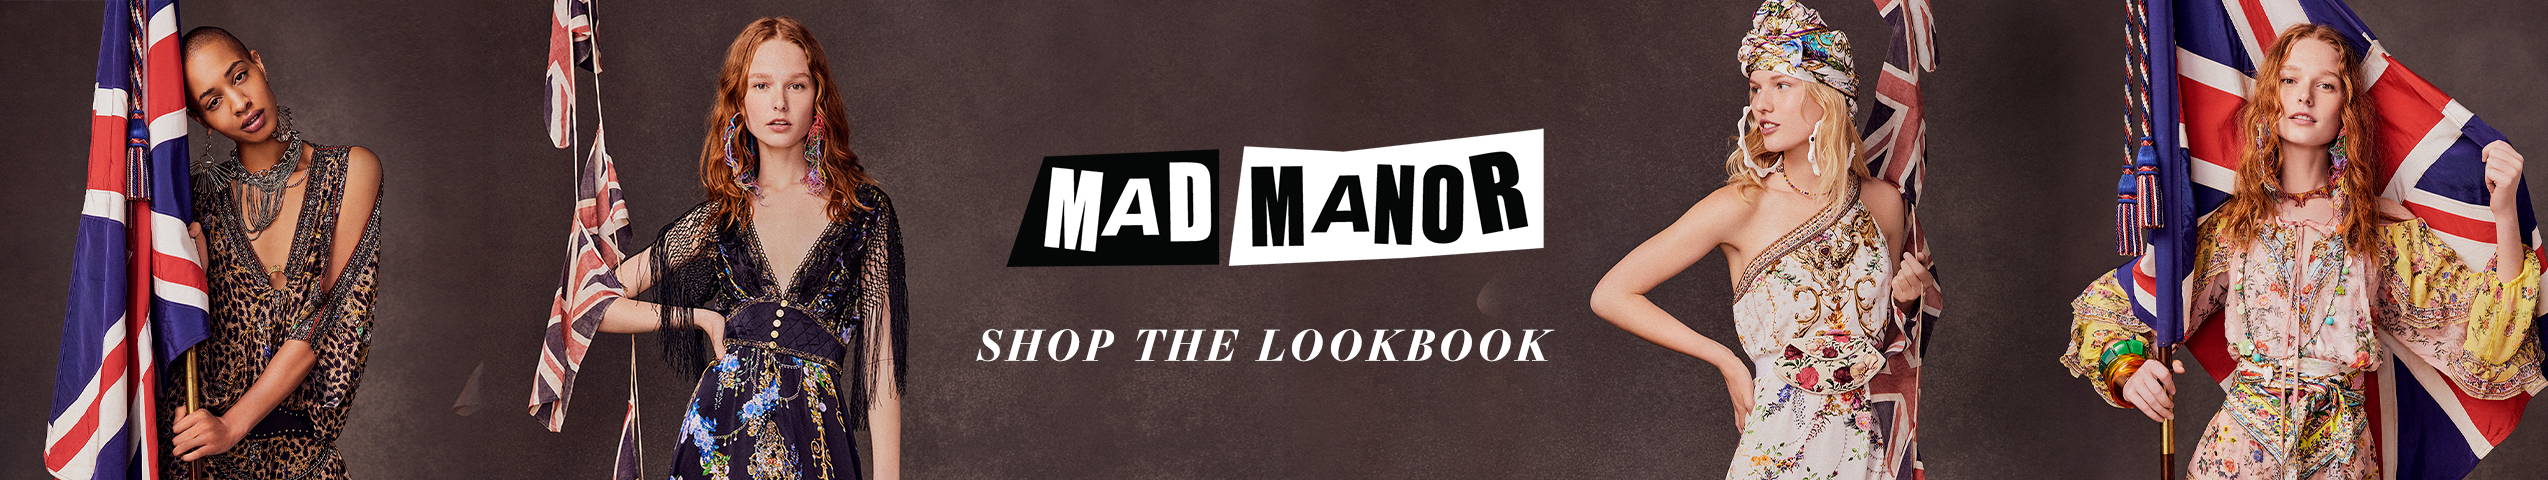 Mad Manor | Shop The Lookbook